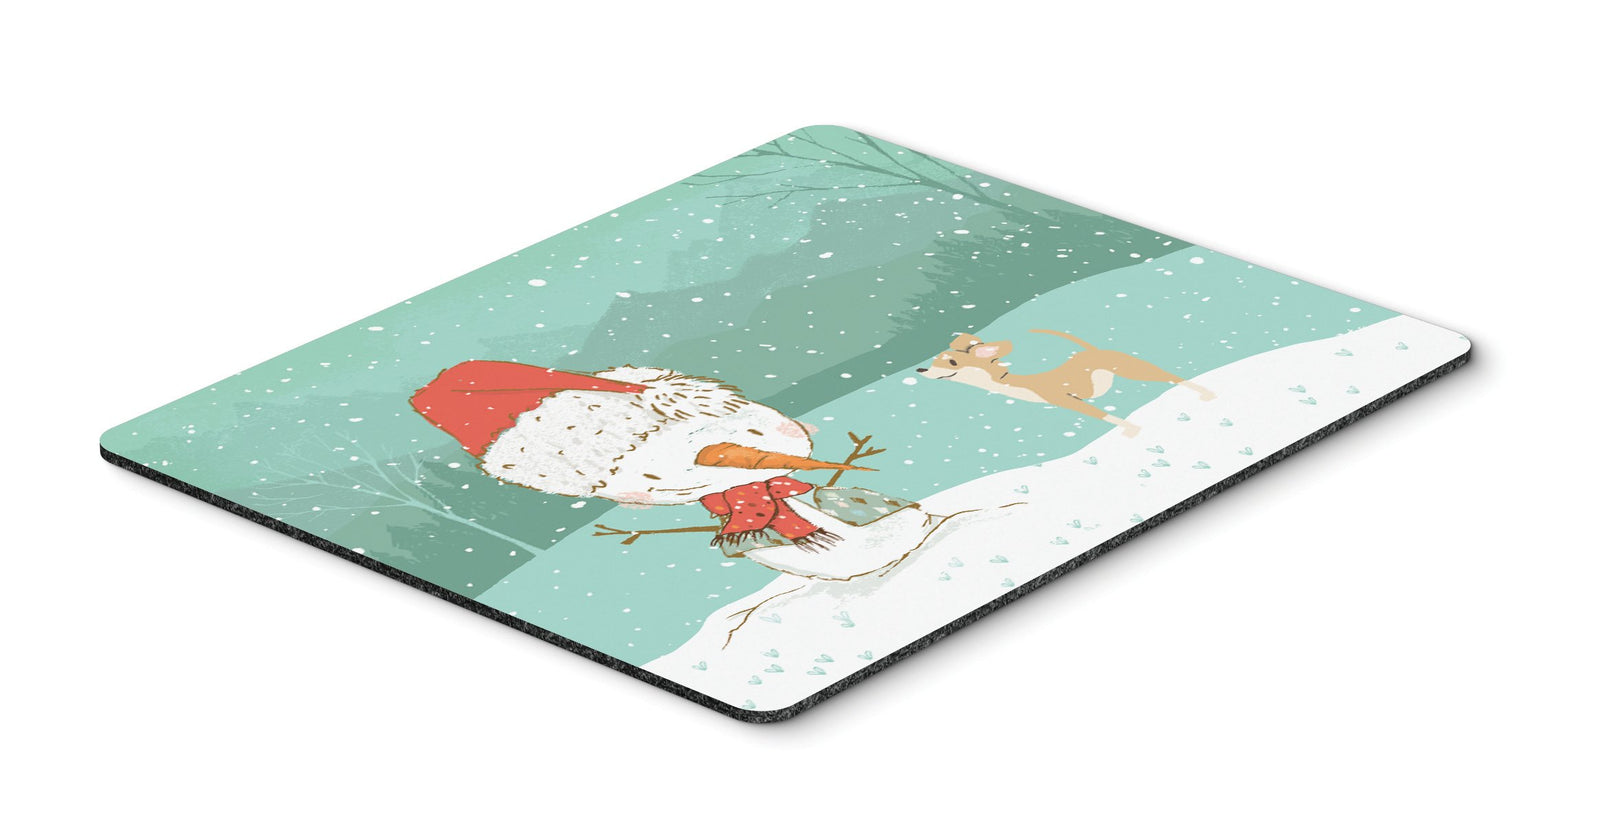 Tan Chihuahua Snowman Christmas Mouse Pad, Hot Pad or Trivet CK2081MP by Caroline's Treasures